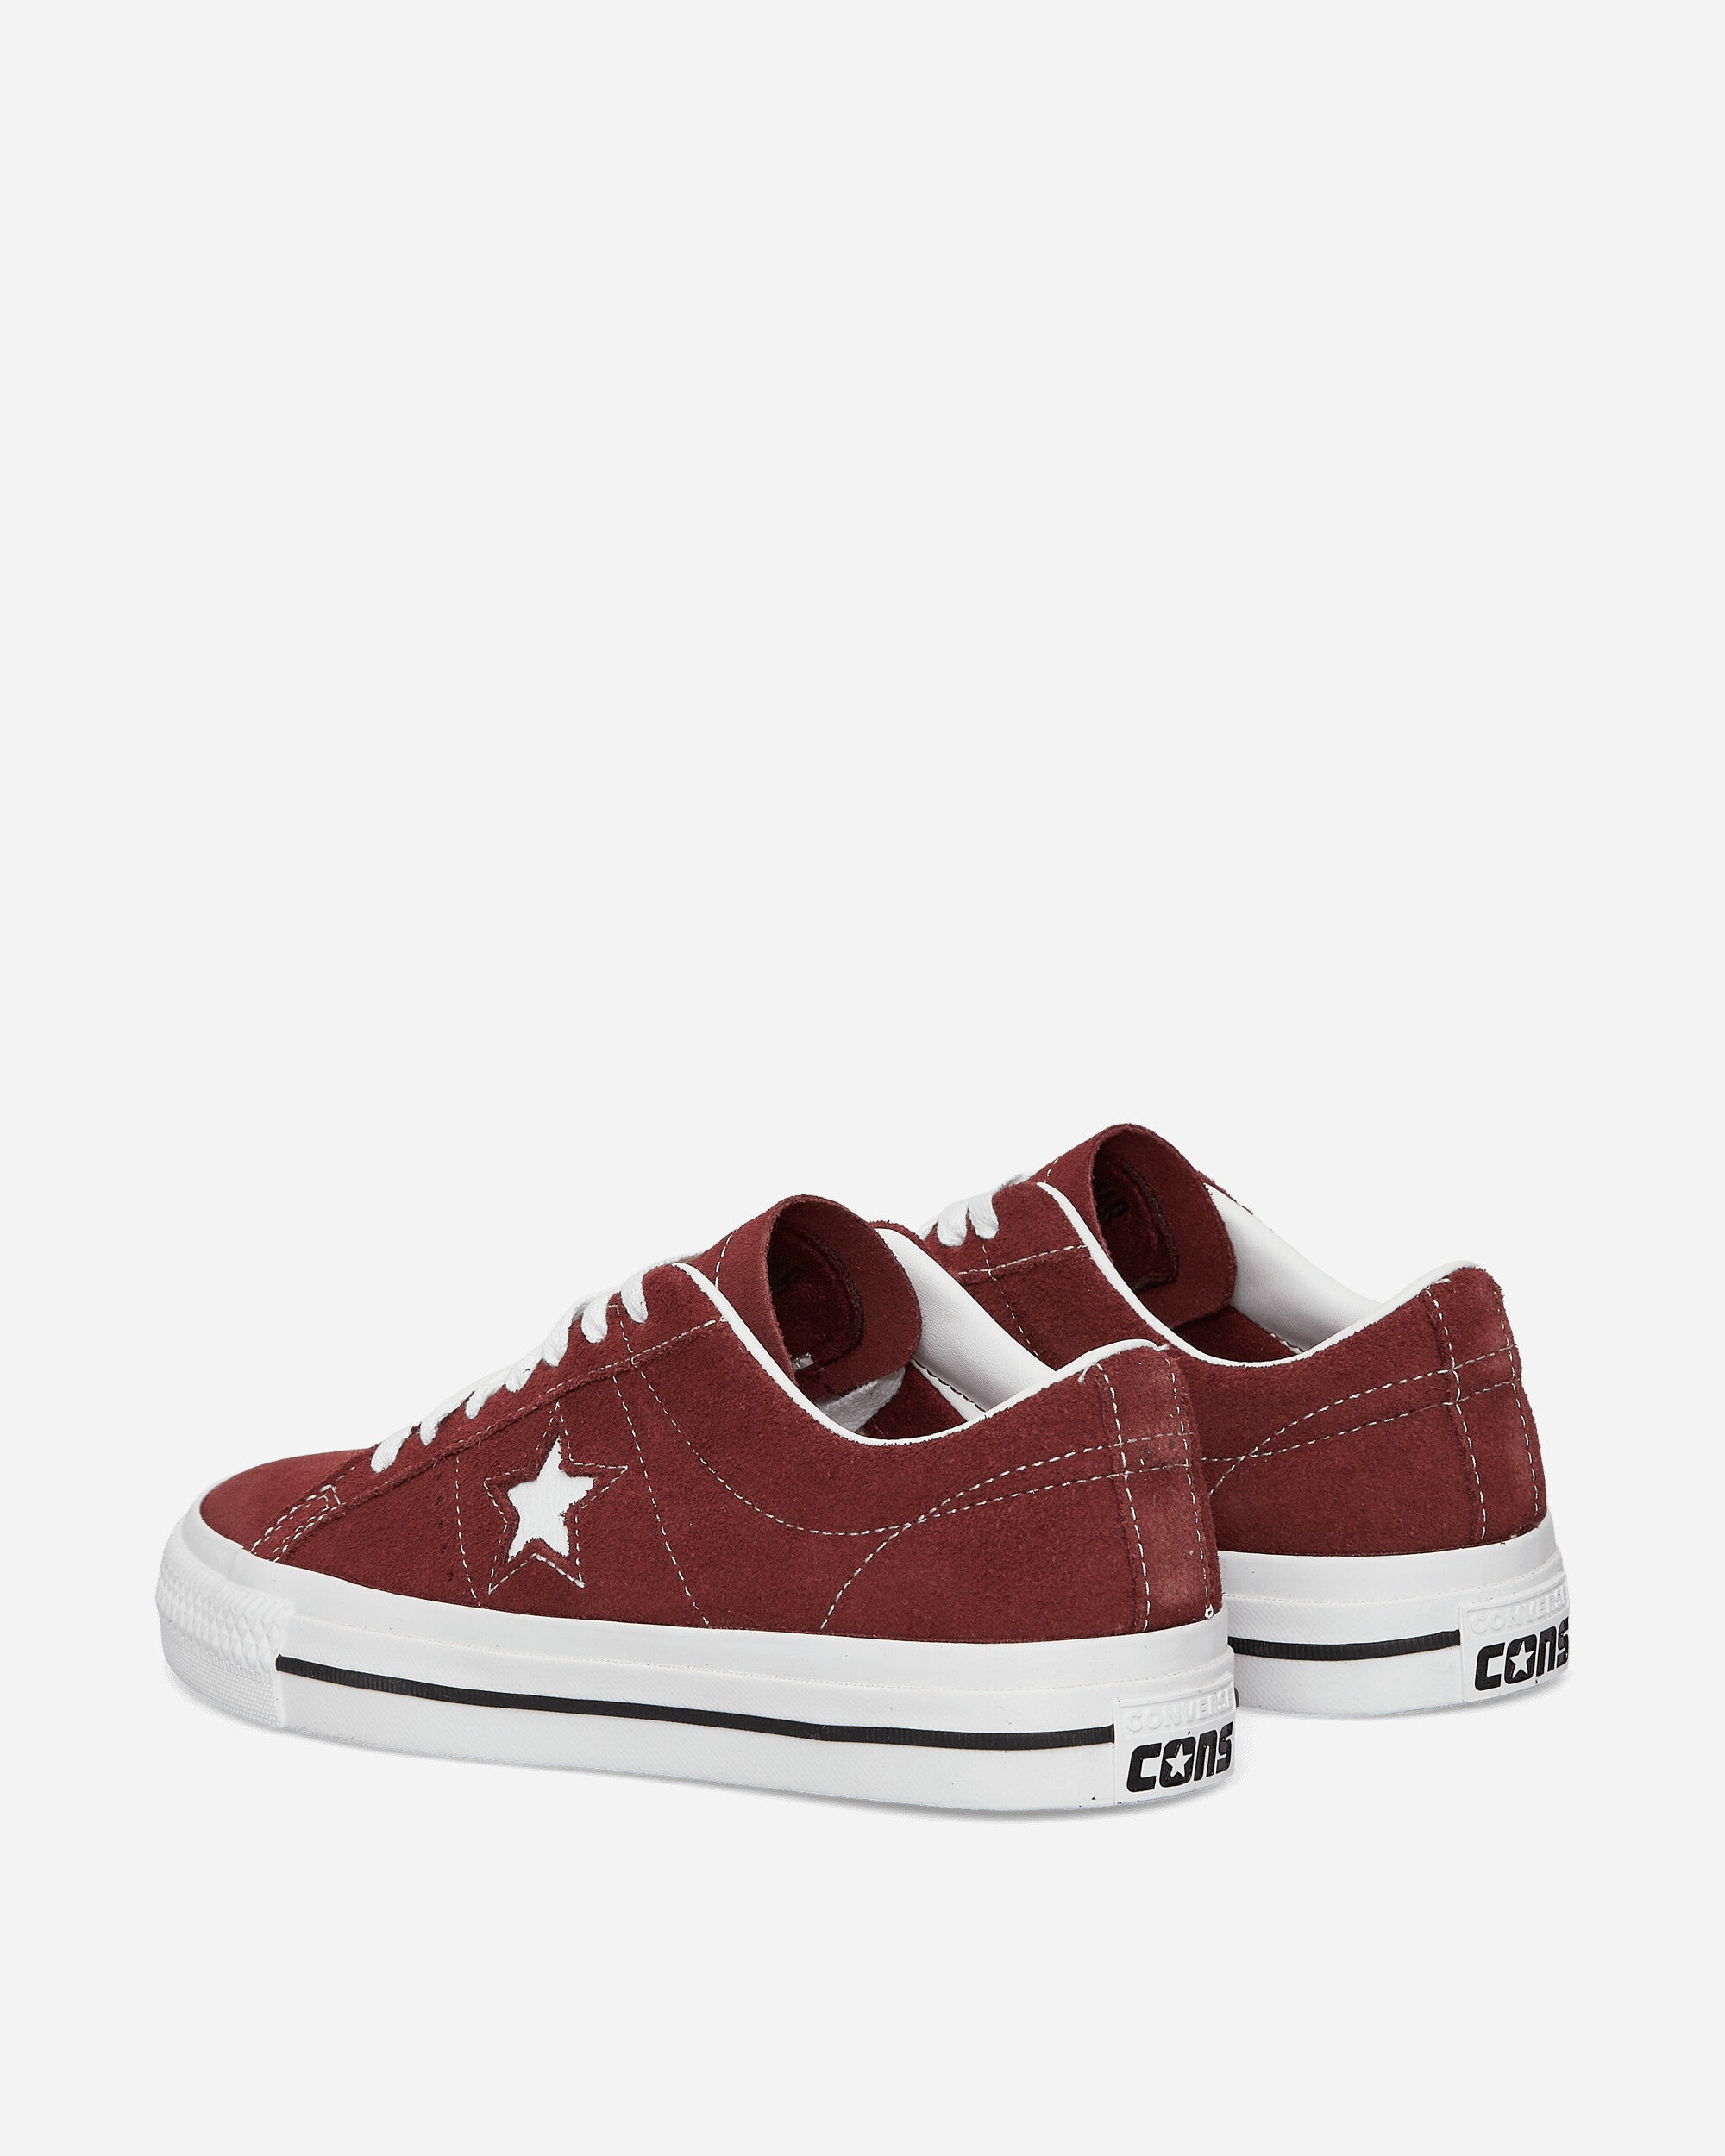 Converse One Star Pro Pueblo Brown/White/Black Sneakers Low A07893C